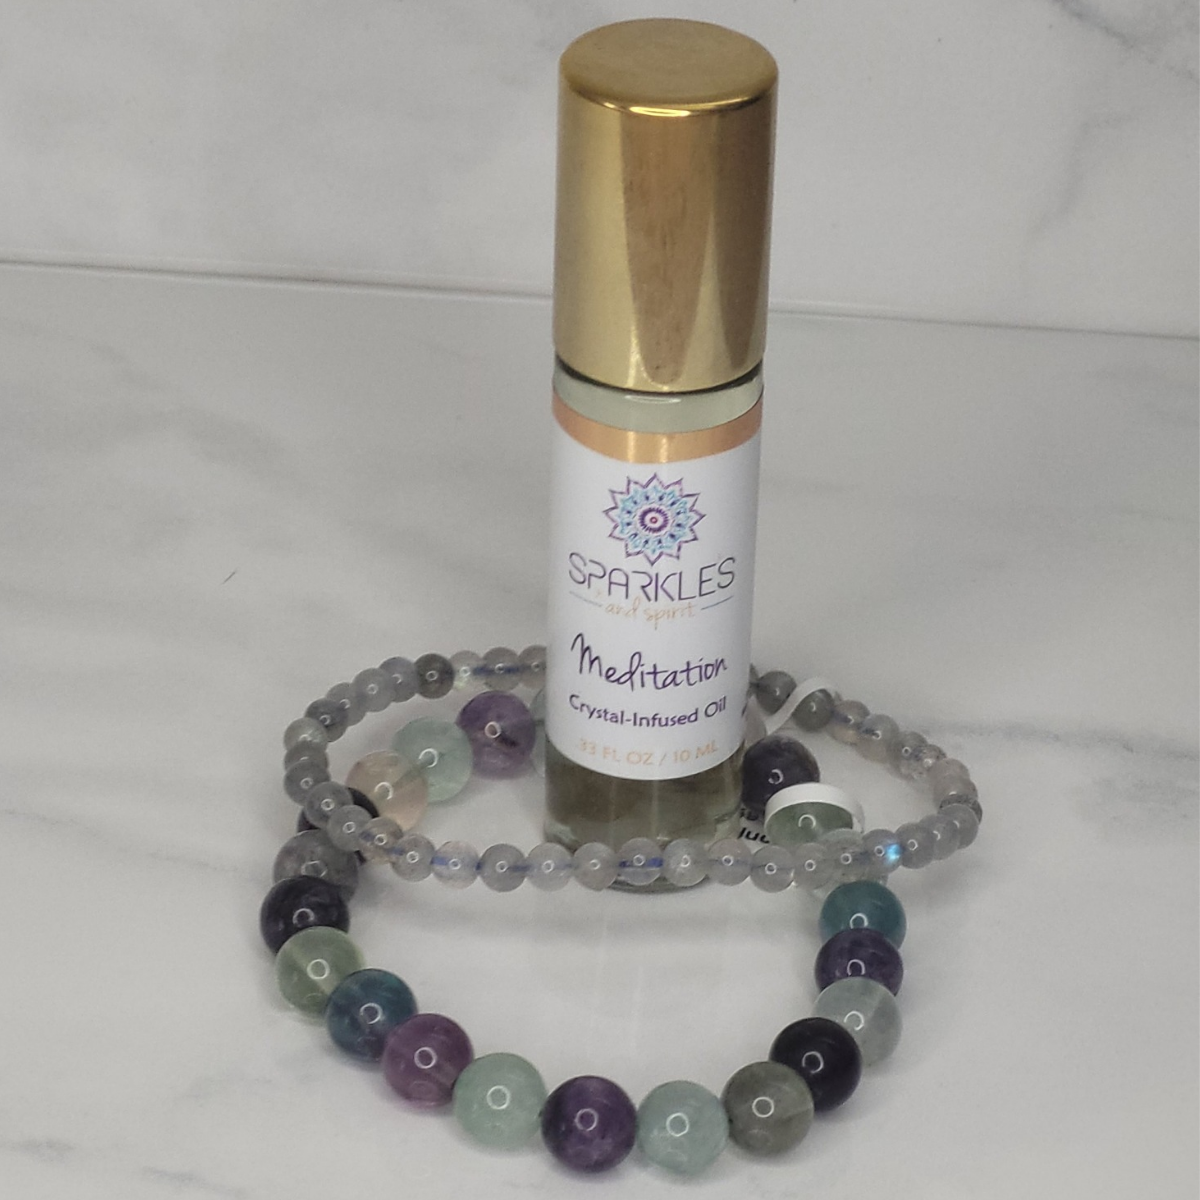 Meditation Crystal-Infused Oil, 8mm Fluorite, and 4mm Labradorite bracelets